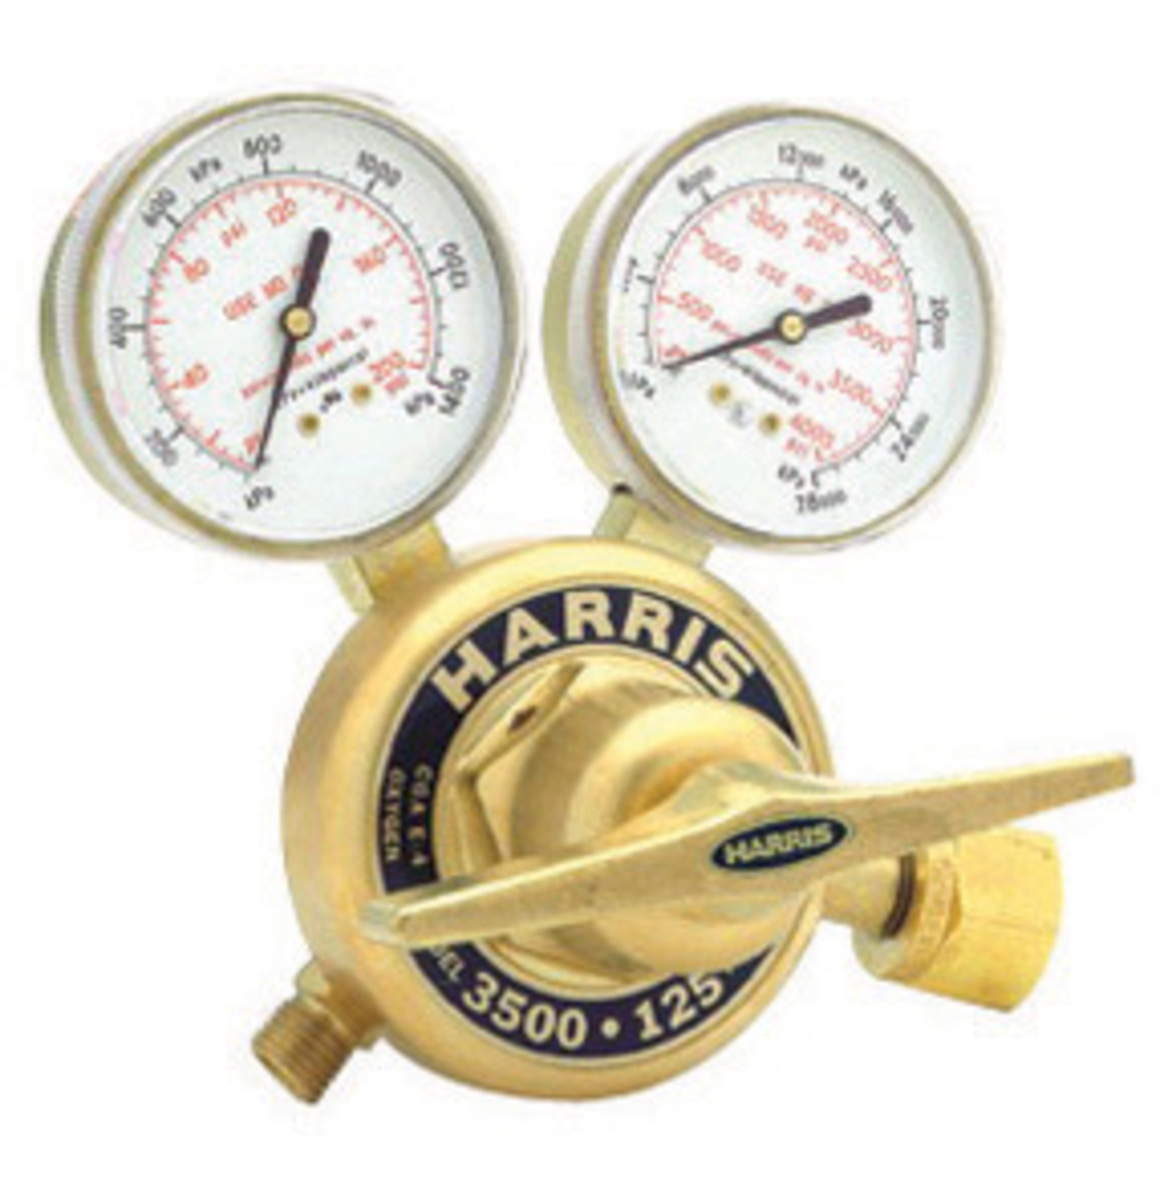 0-15 PSIG Brass Harris 3500-15-510 Manifold Pressure Regulator